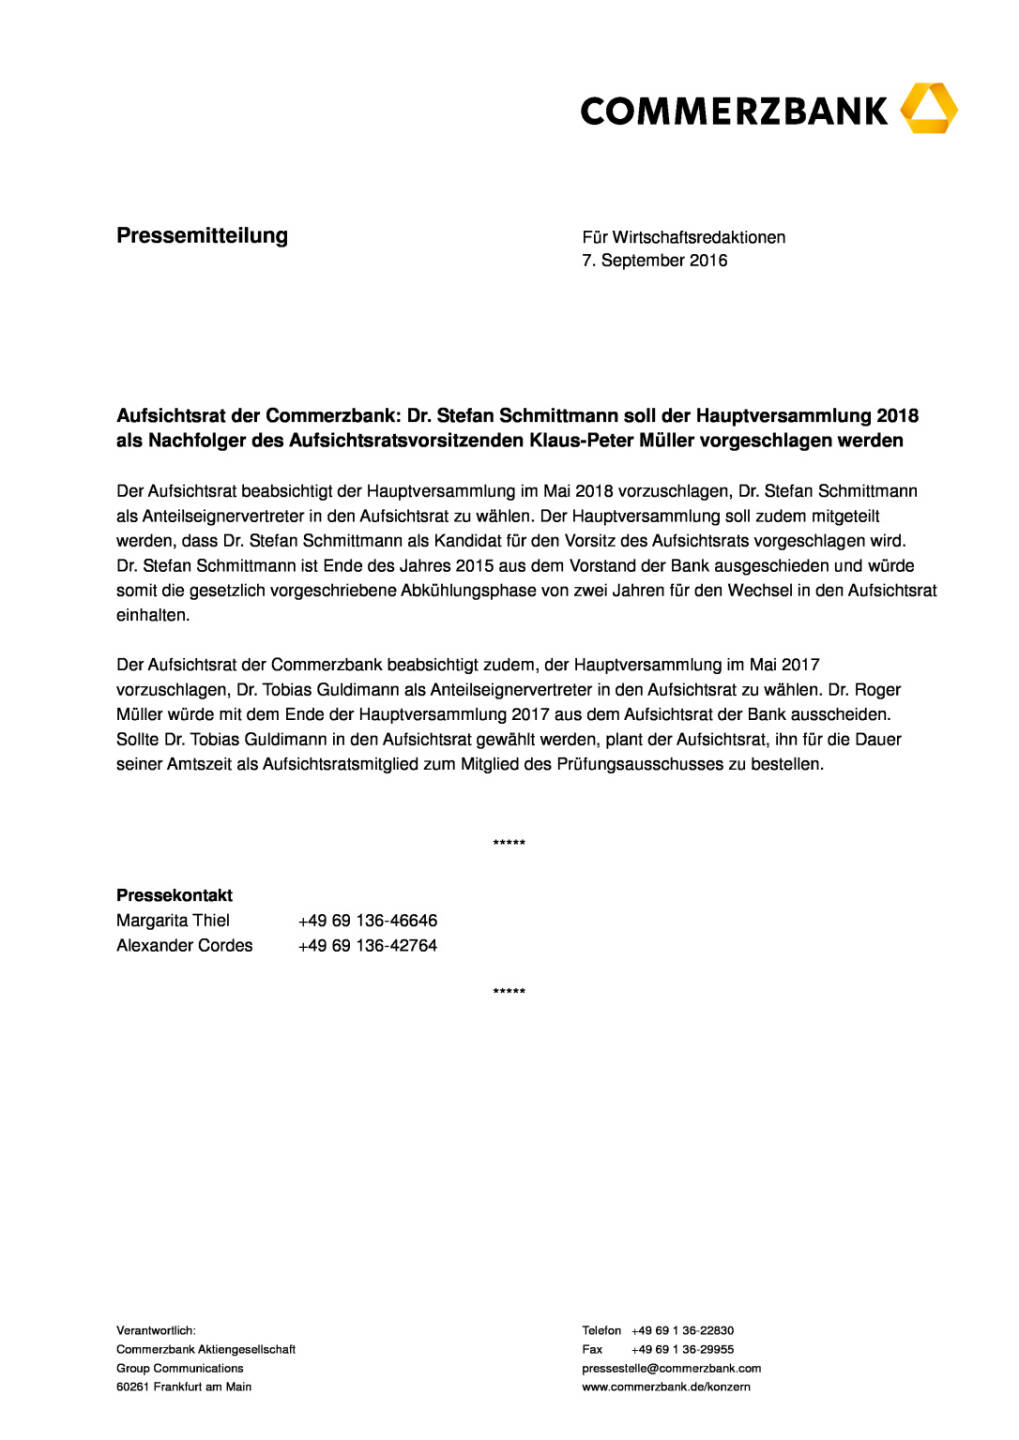 Commerzbank: Aufsichtsrat, Seite 1/2, komplettes Dokument unter http://boerse-social.com/static/uploads/file_1740_commerzbank_aufsichtsrat.pdf